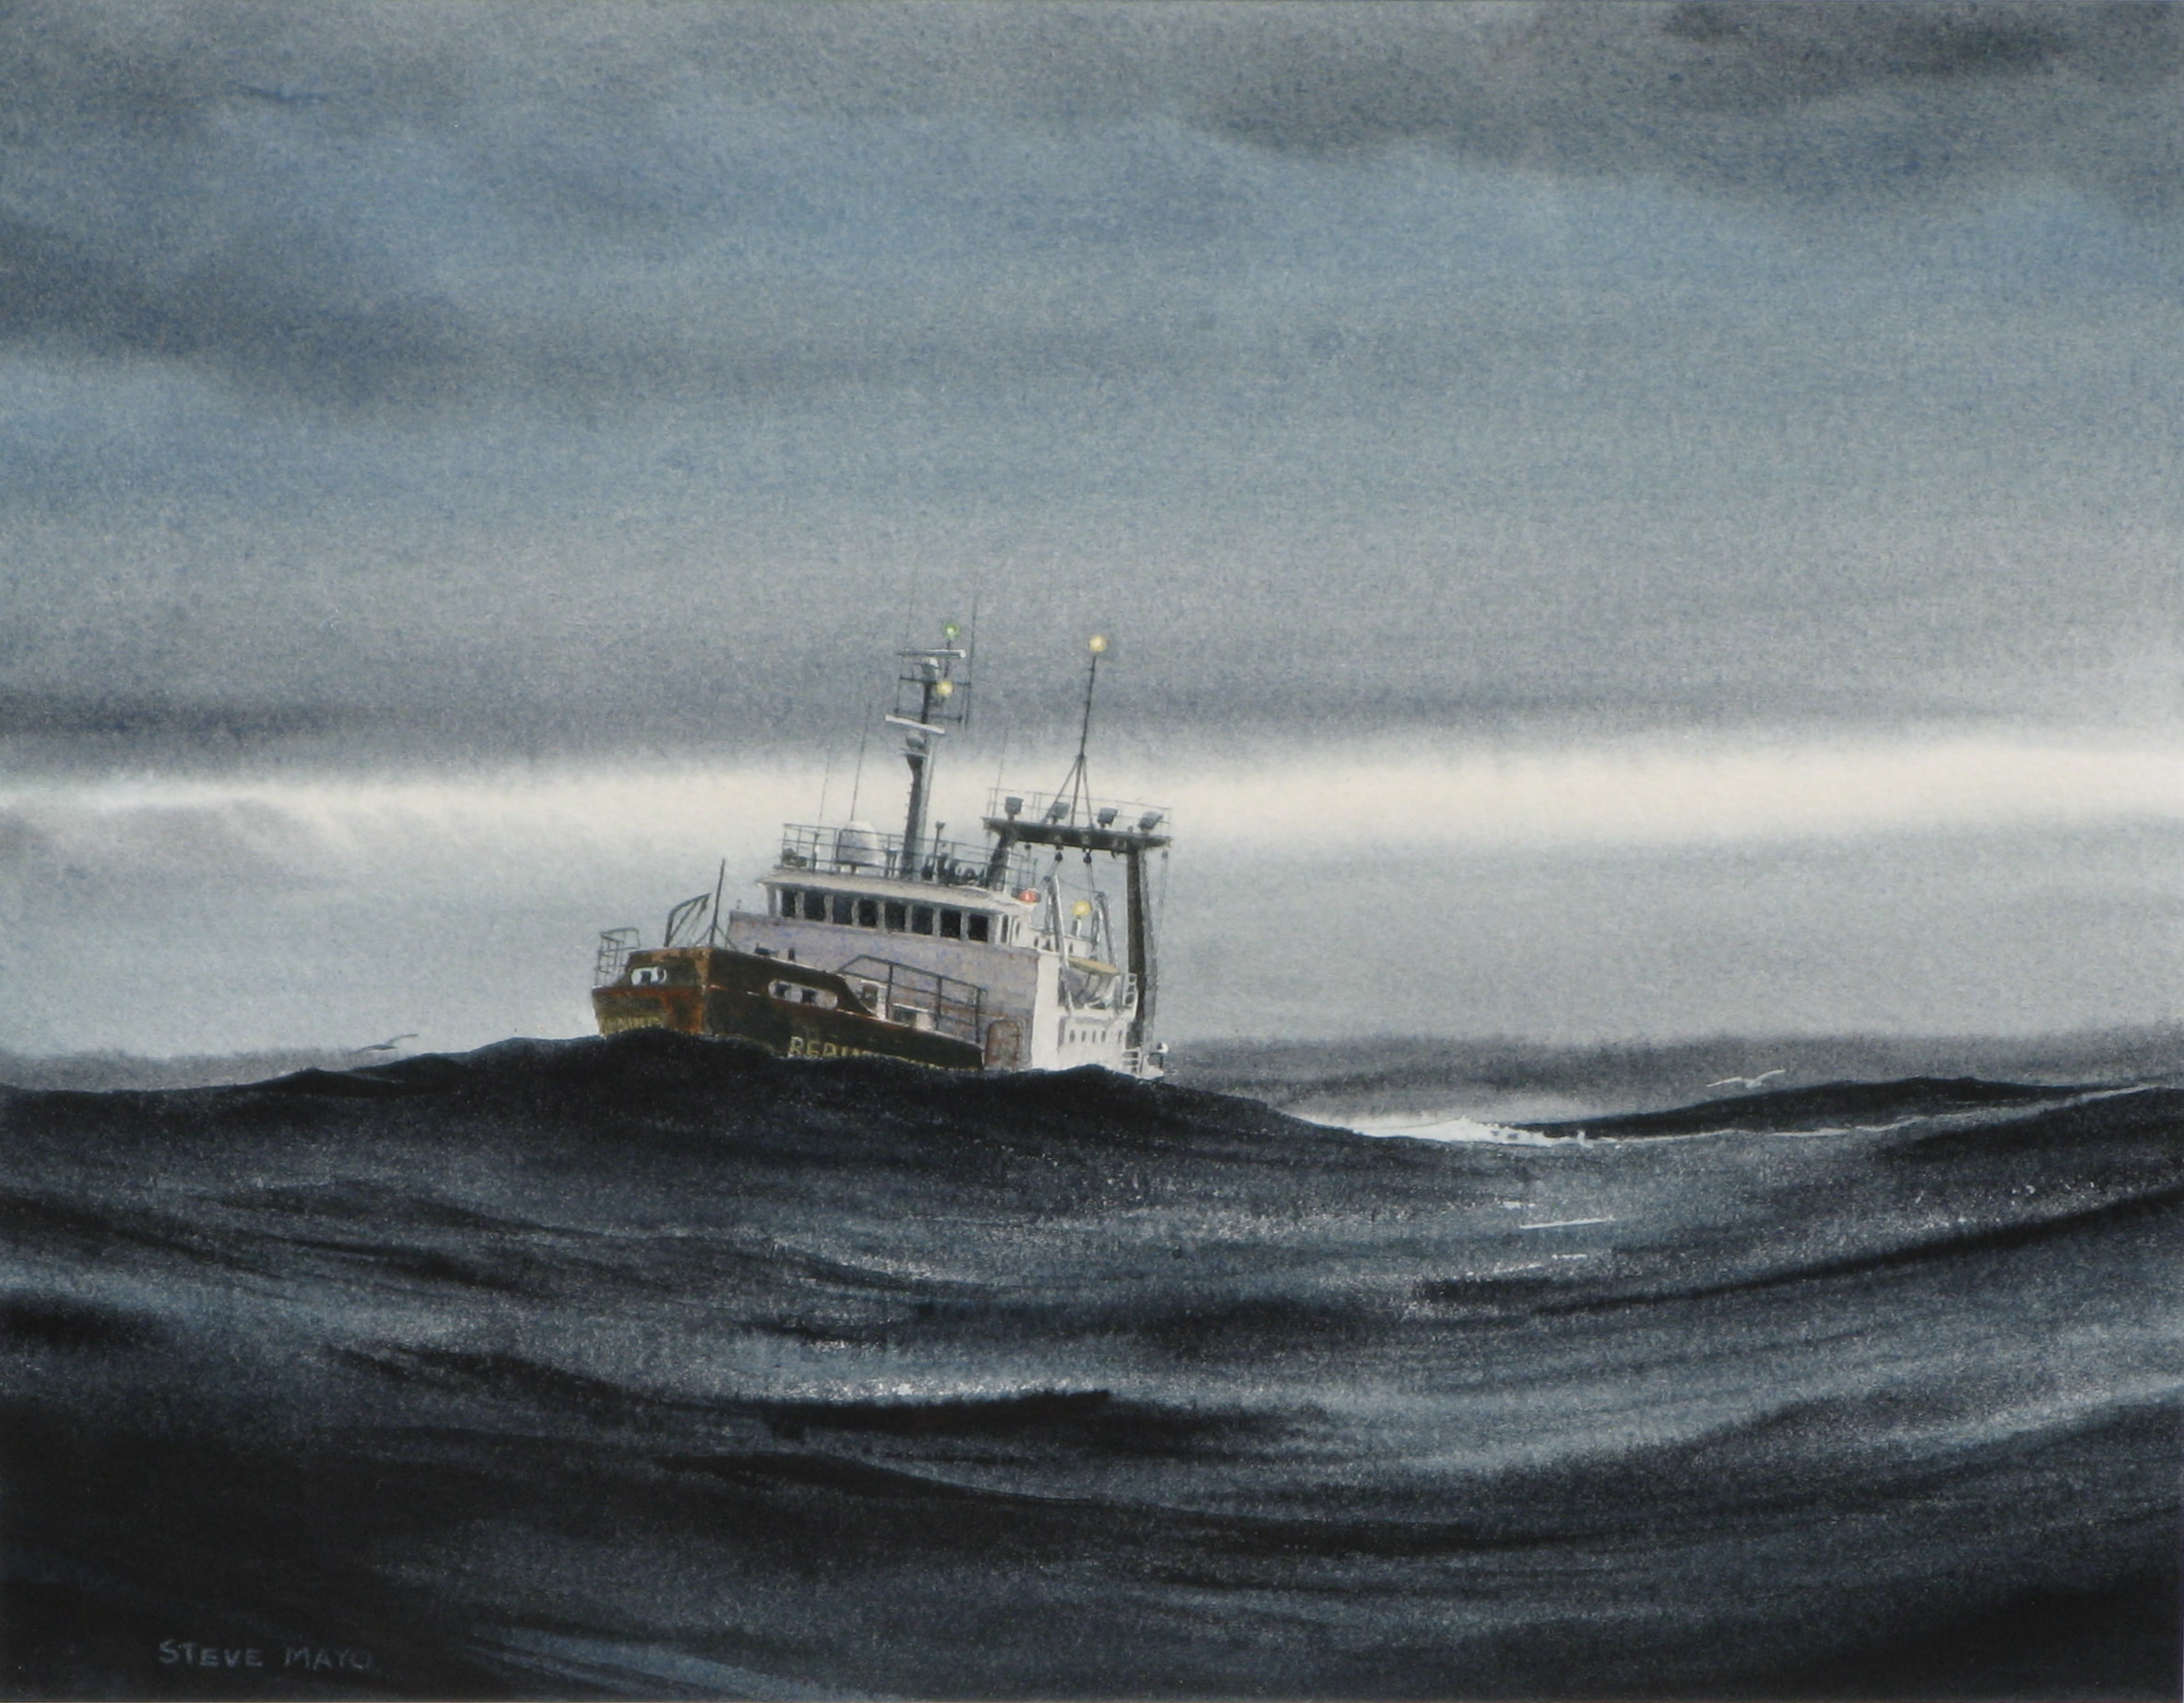 Trawler at Sea